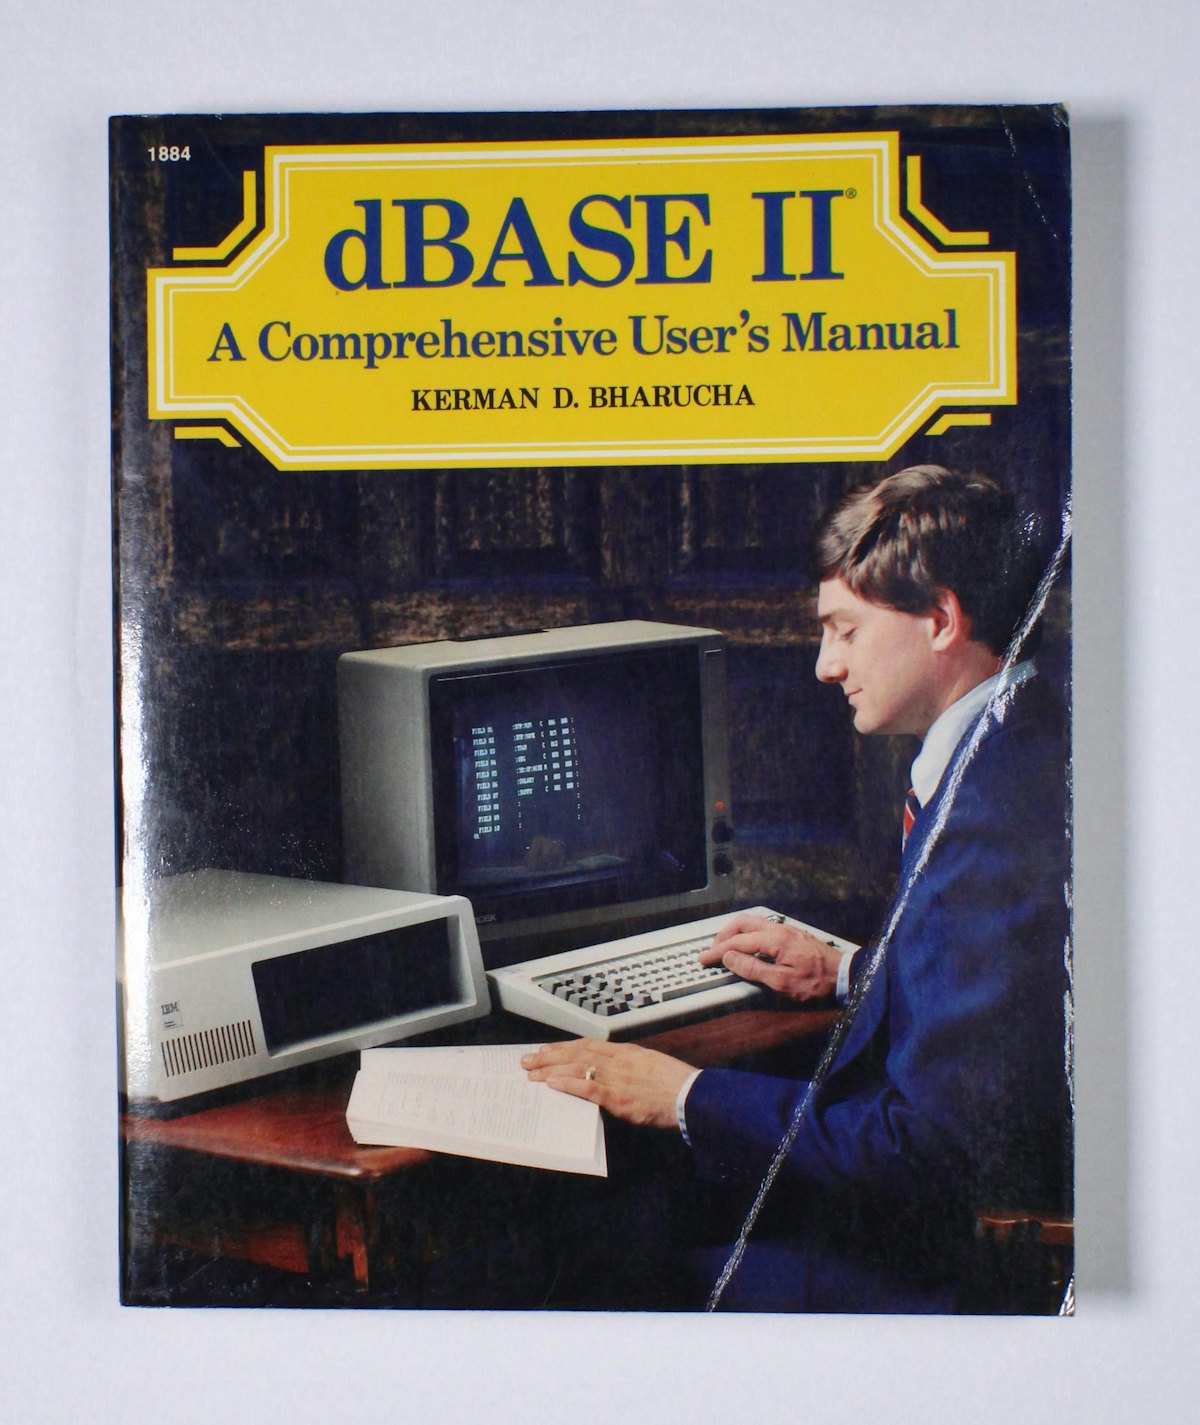 dBase II: A Comprehensive User's Manual